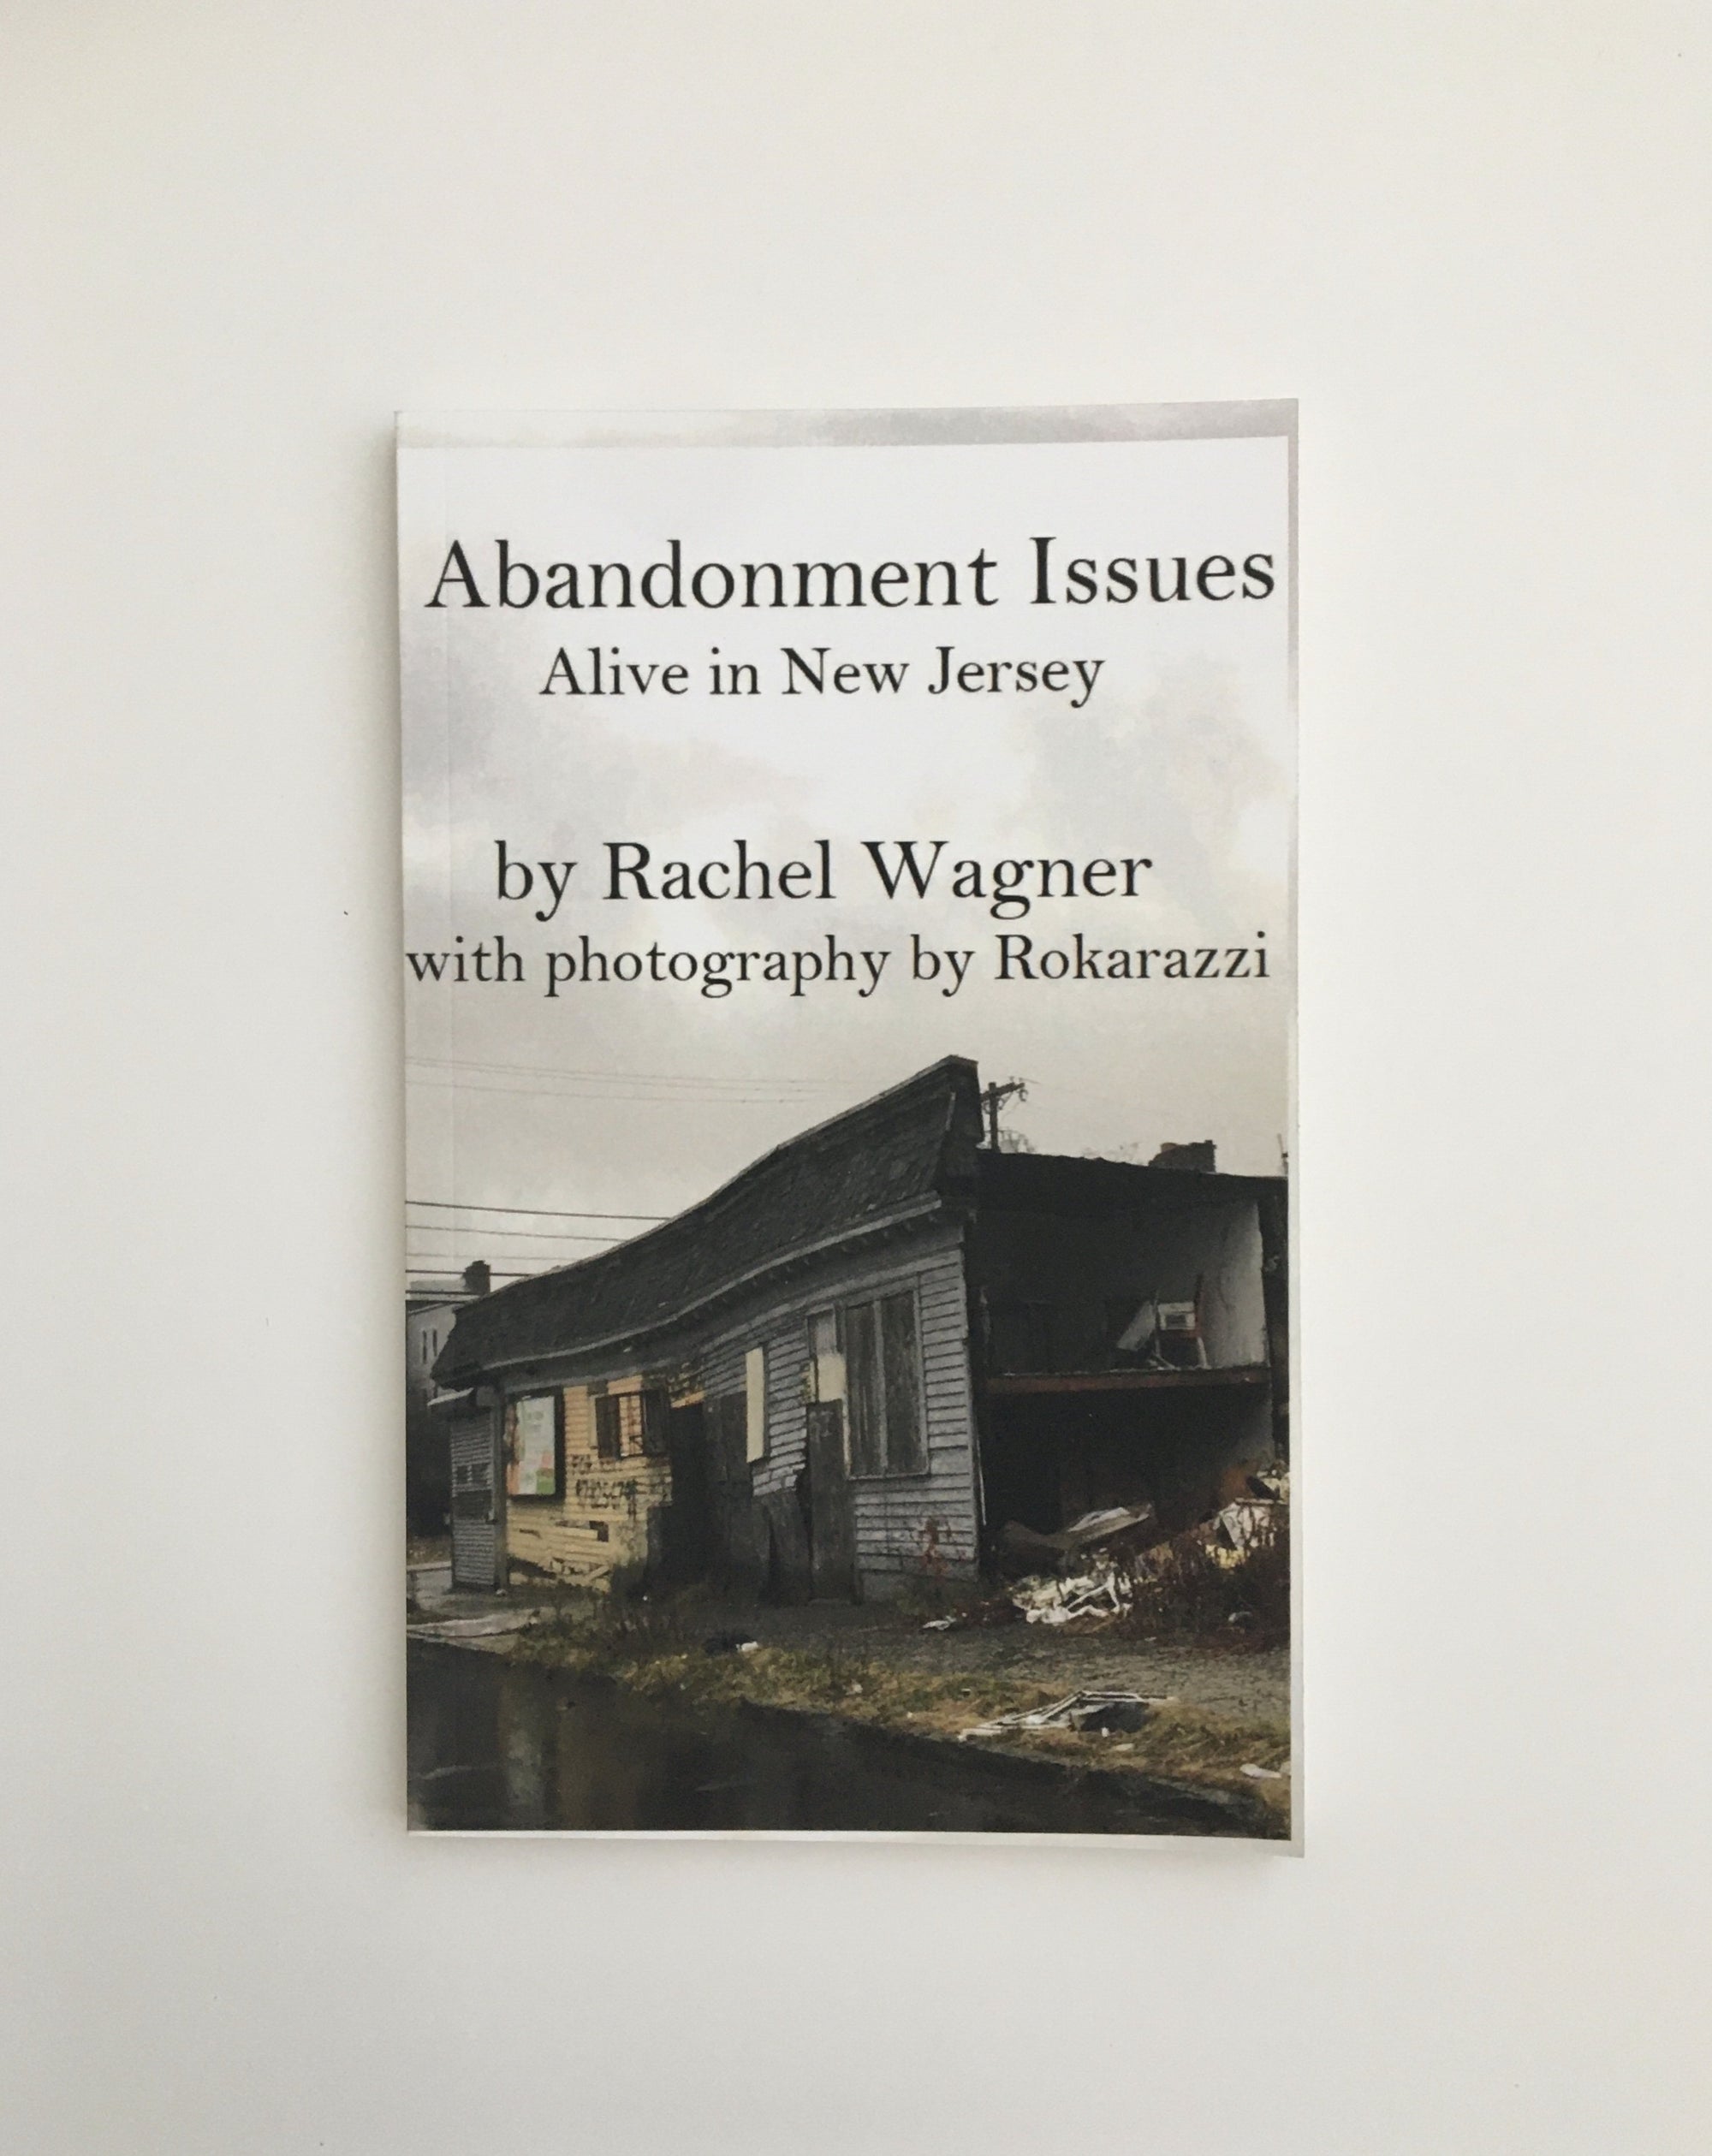 Abandonment Issues by Rachel Wagner, Book, Ten Dollar Books, Ten Dollar Books